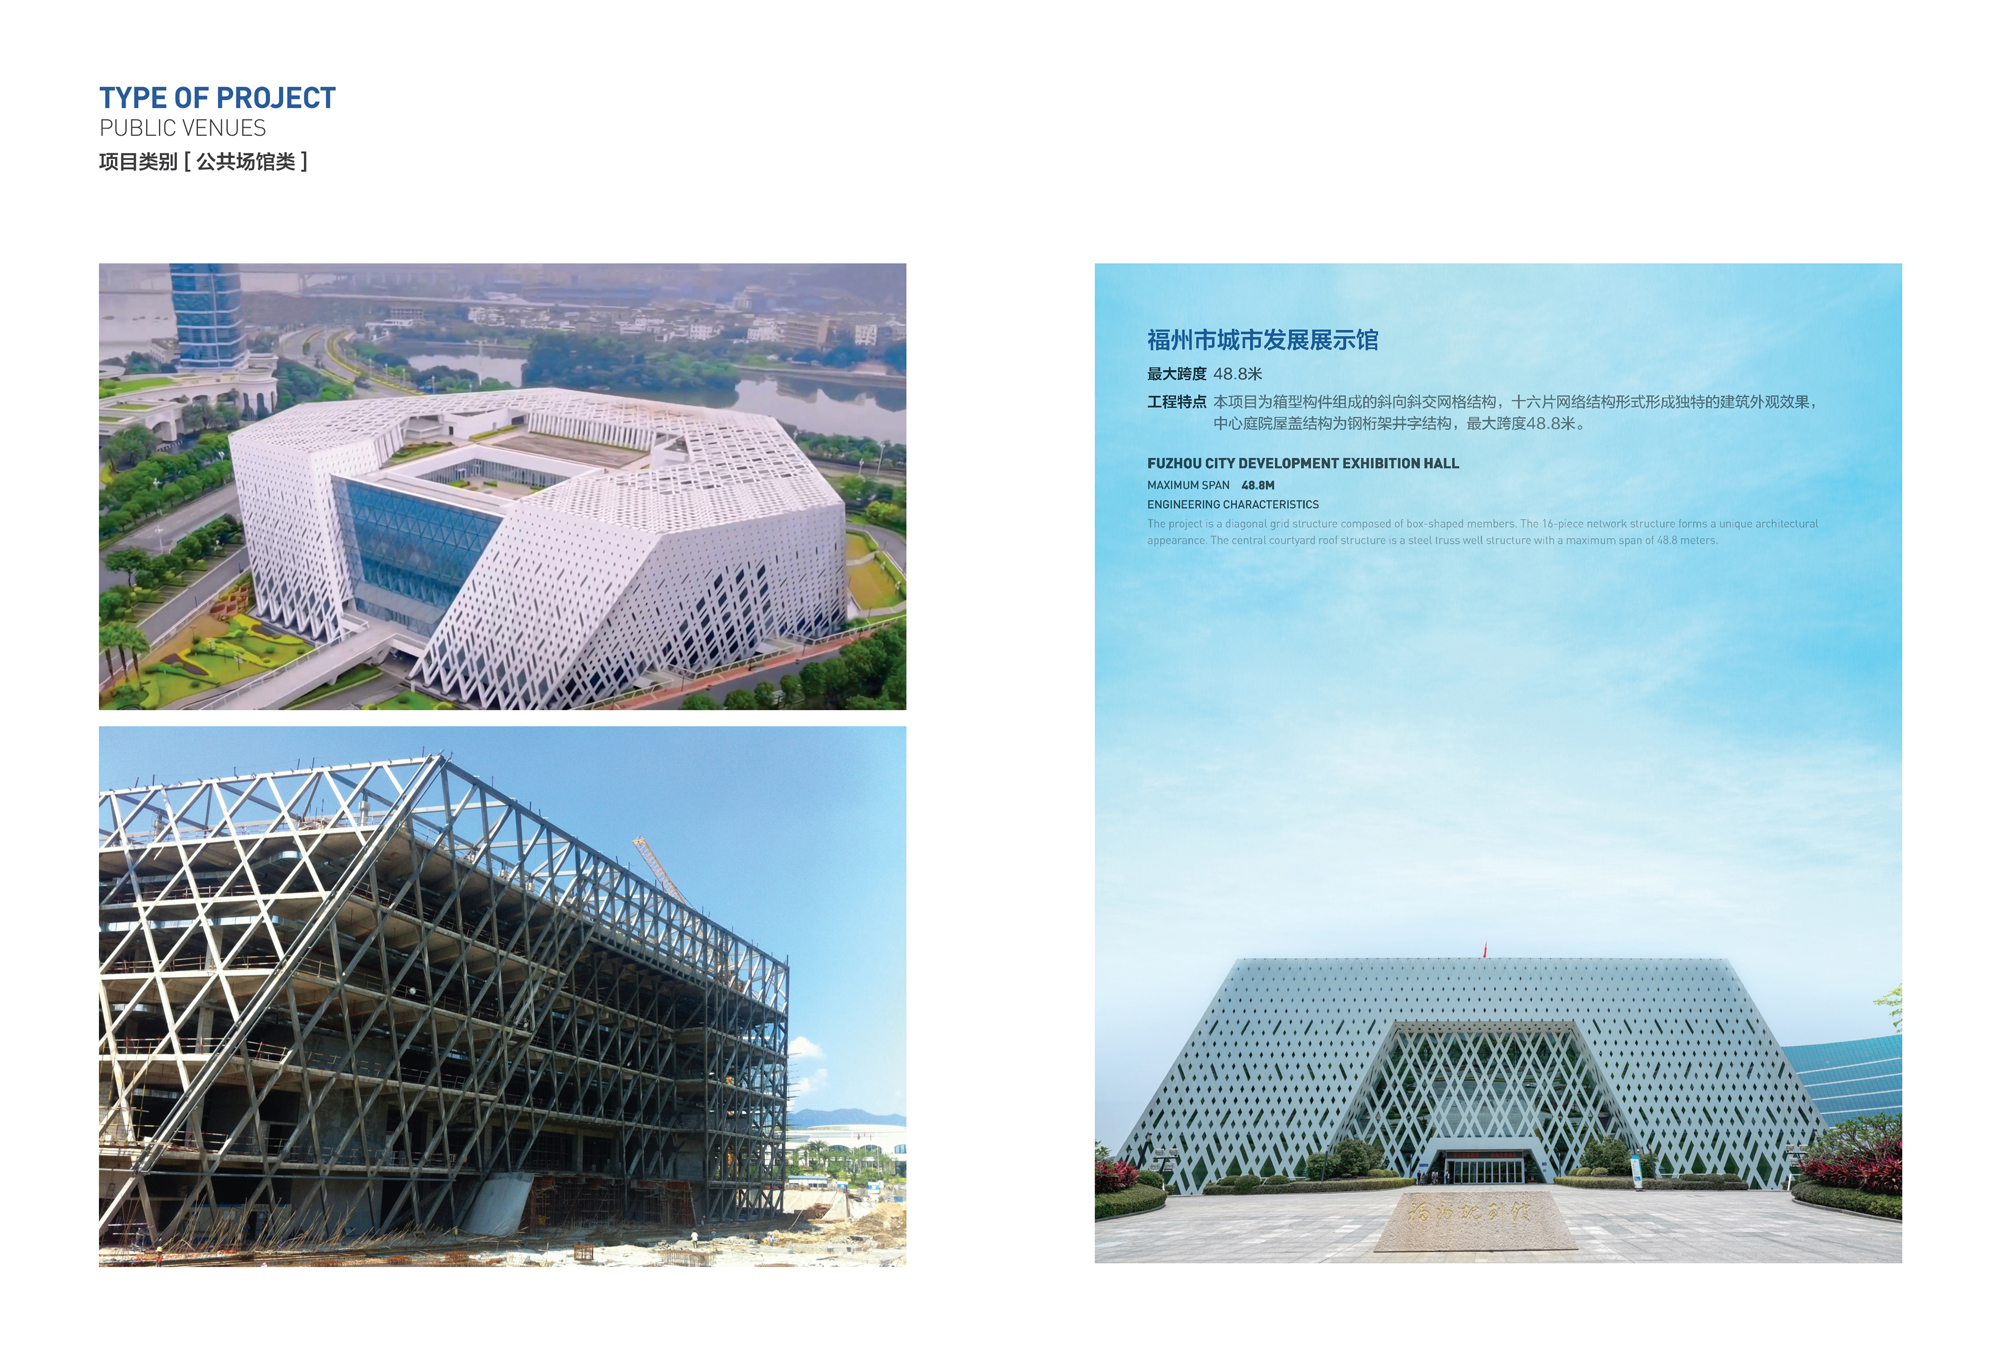 Fuzhou City Development Exhibition Hall